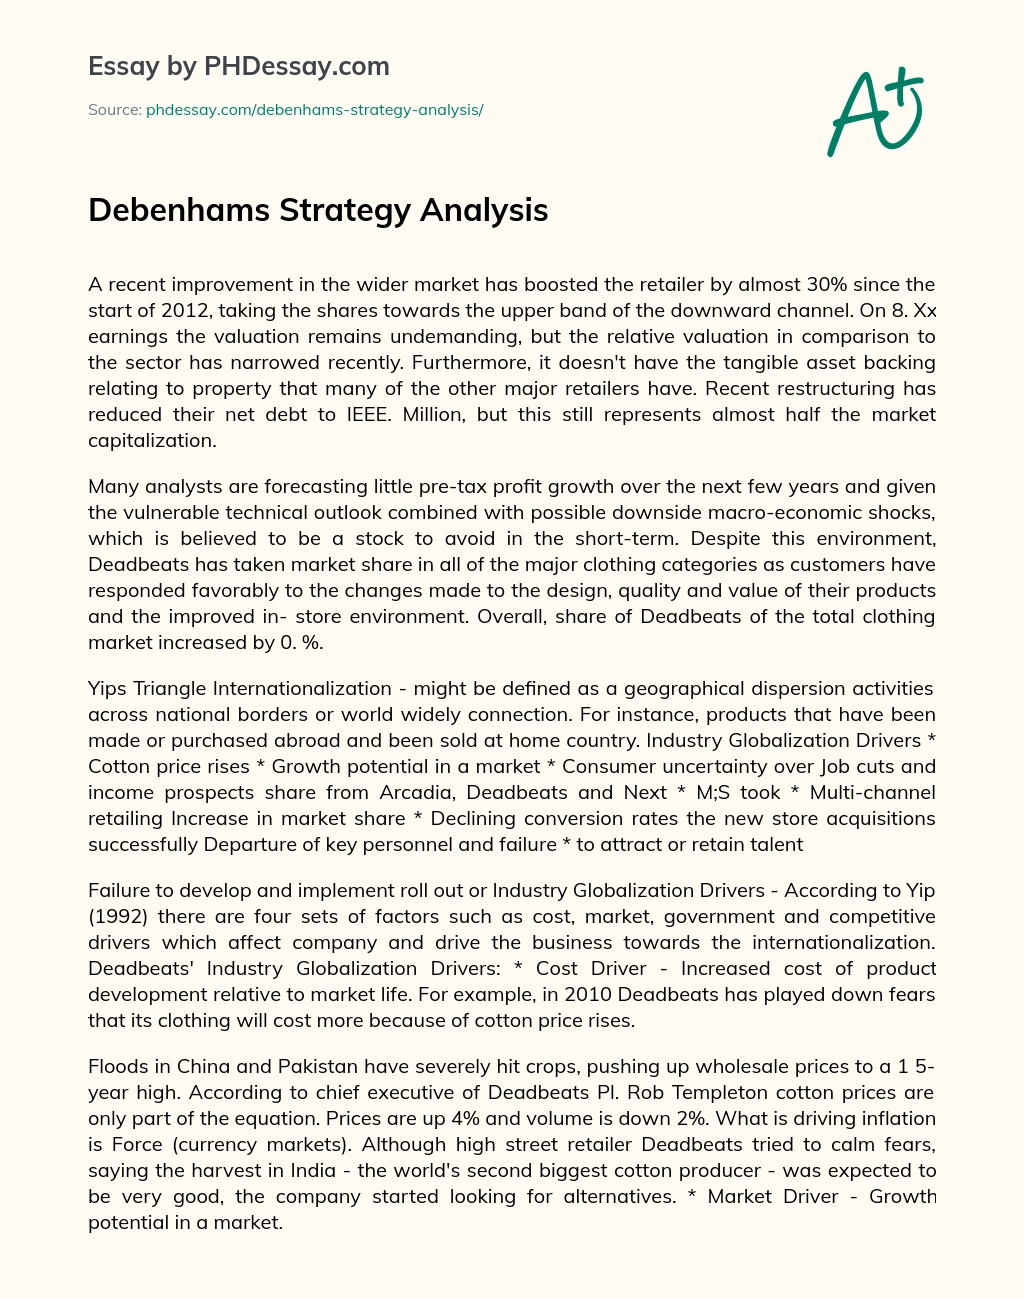 Debenhams Strategy Analysis essay